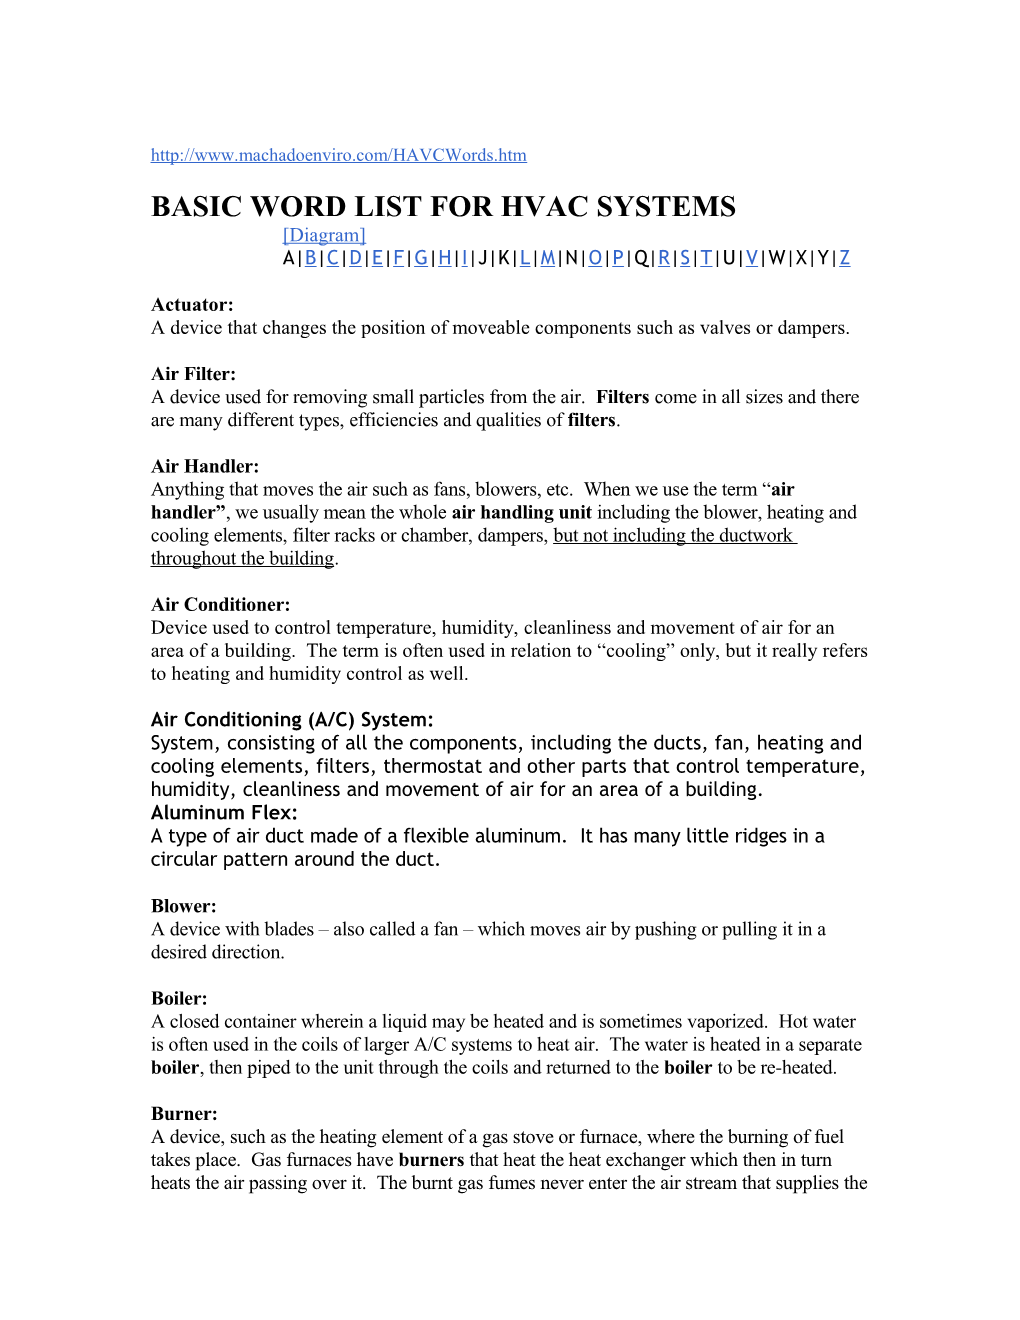 BASIC WORD LIST for HVAC SYSTEMS Diagram a B C D E F G H I J K L M N O P Q R S T U V W X Y Z